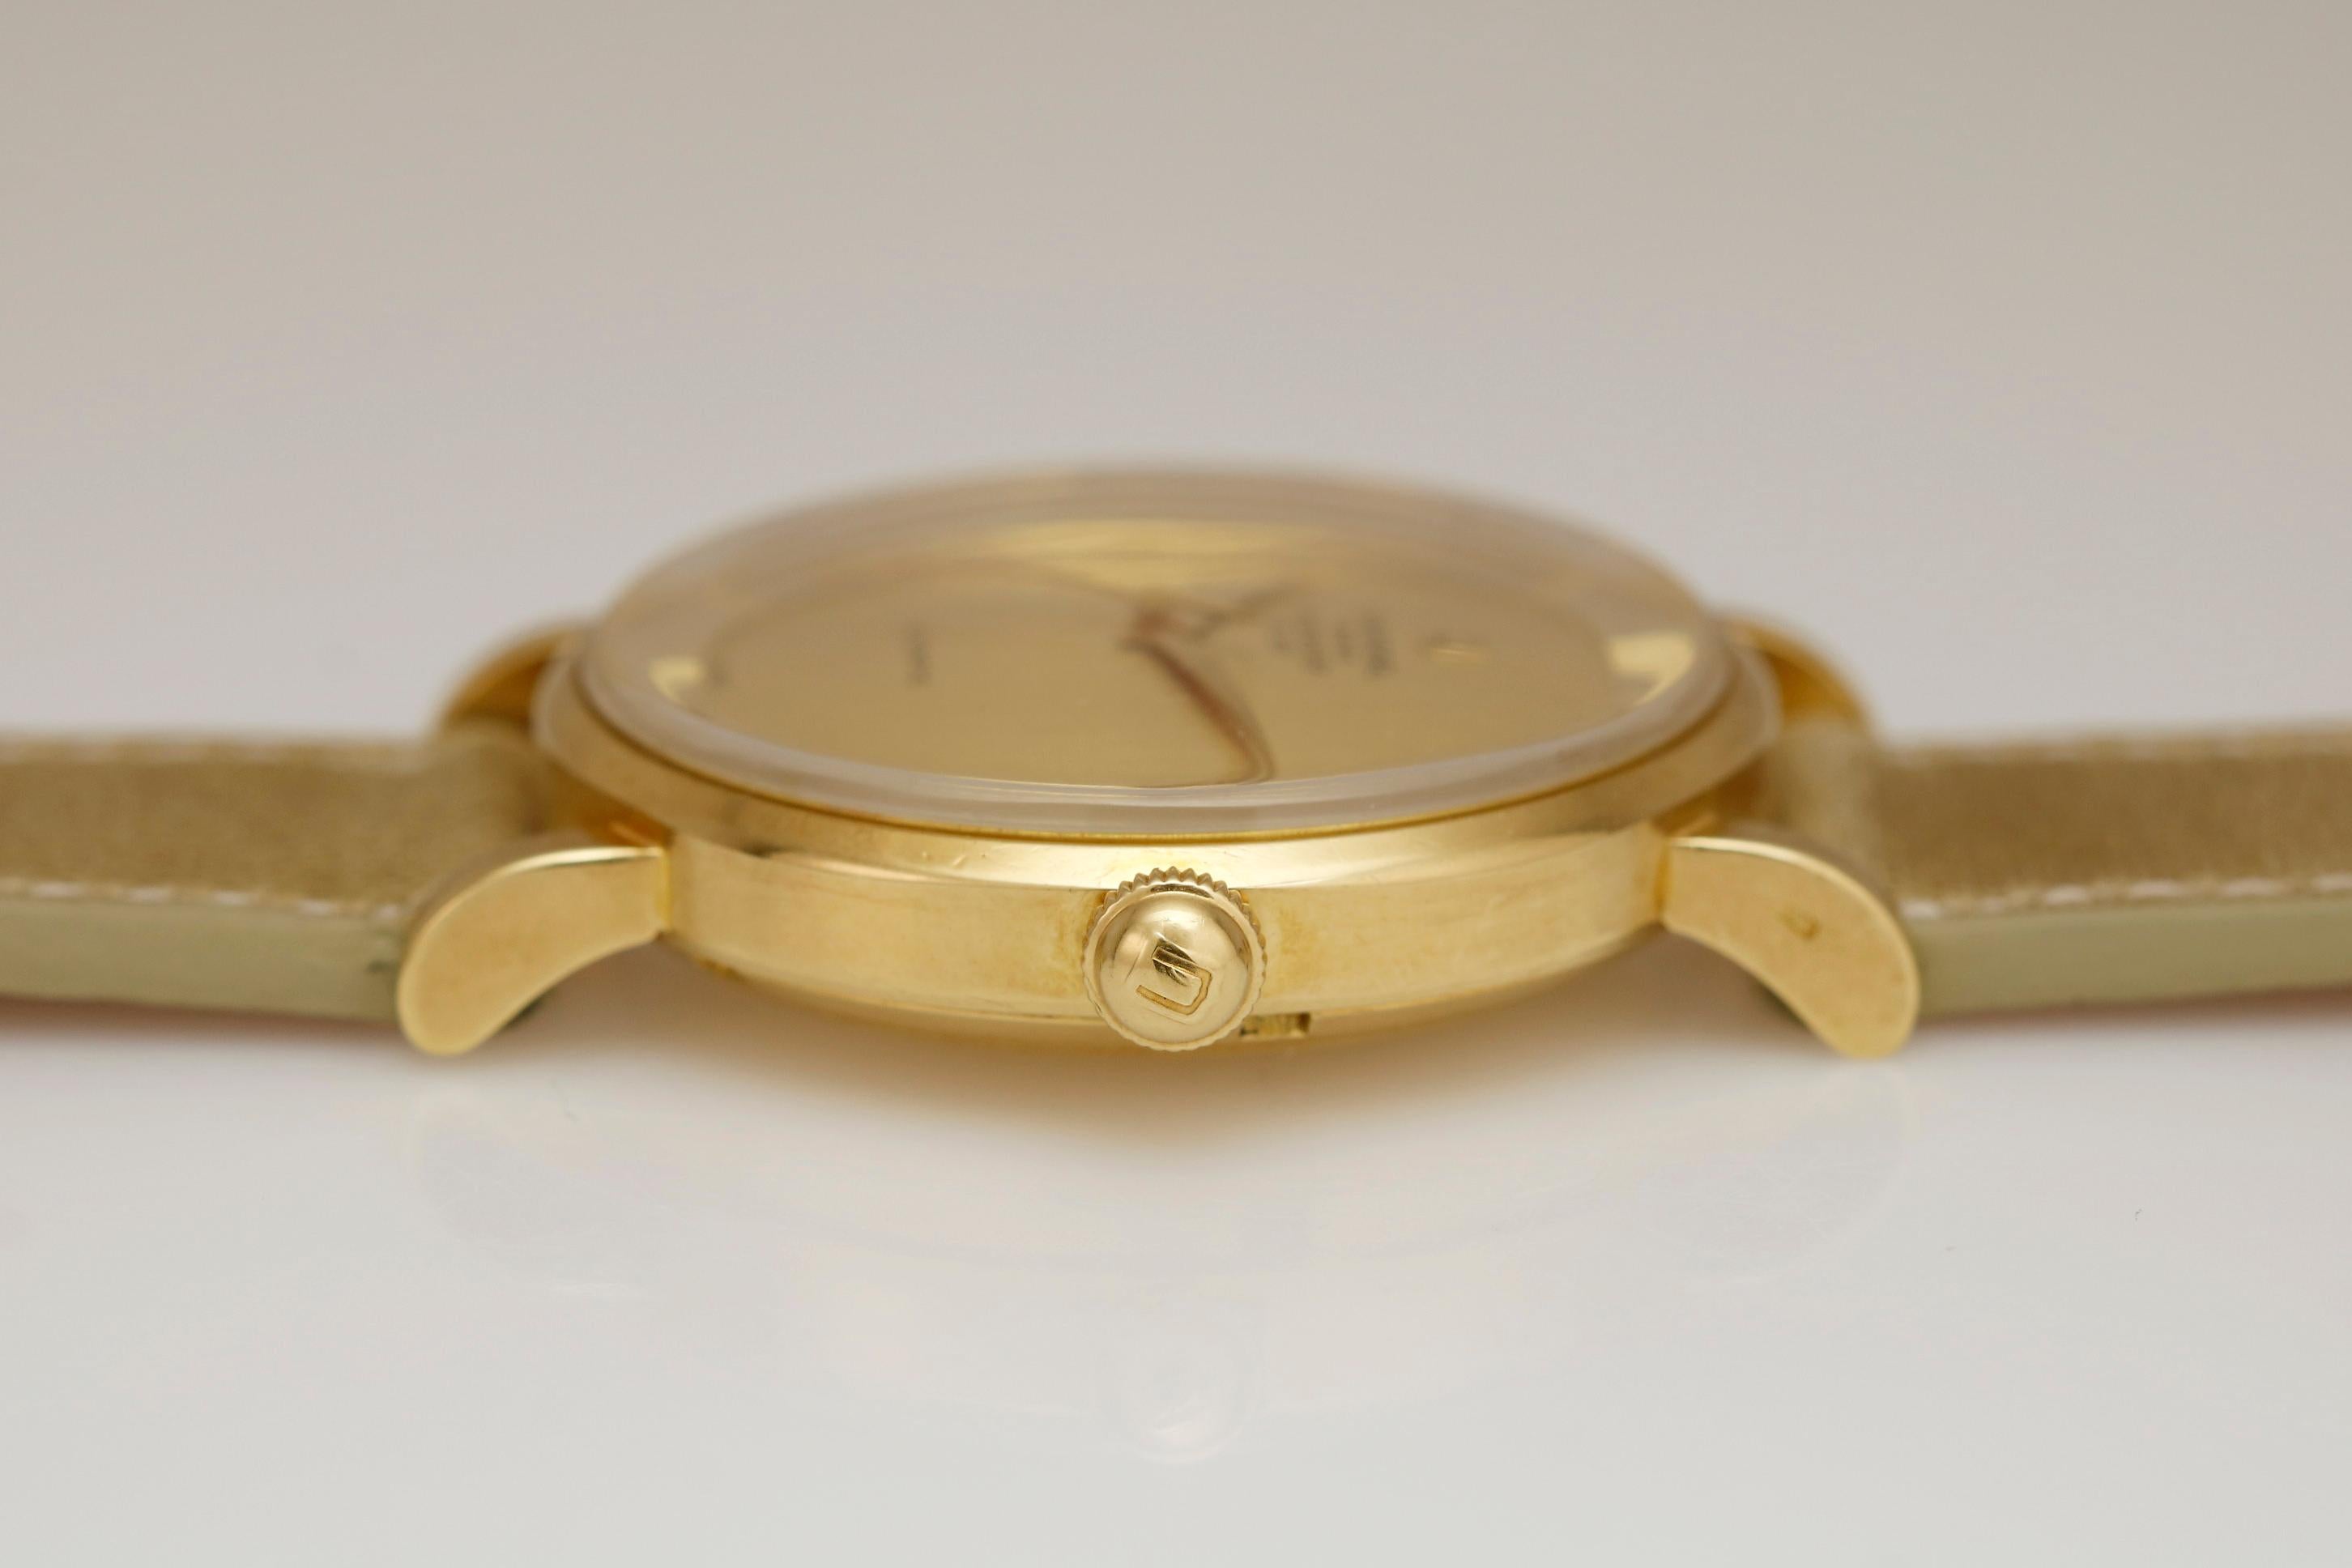 Universal Geneve Polerouter De Luxe Ref B10234 1 Yellow Gold Wristwatch c. 1950 5